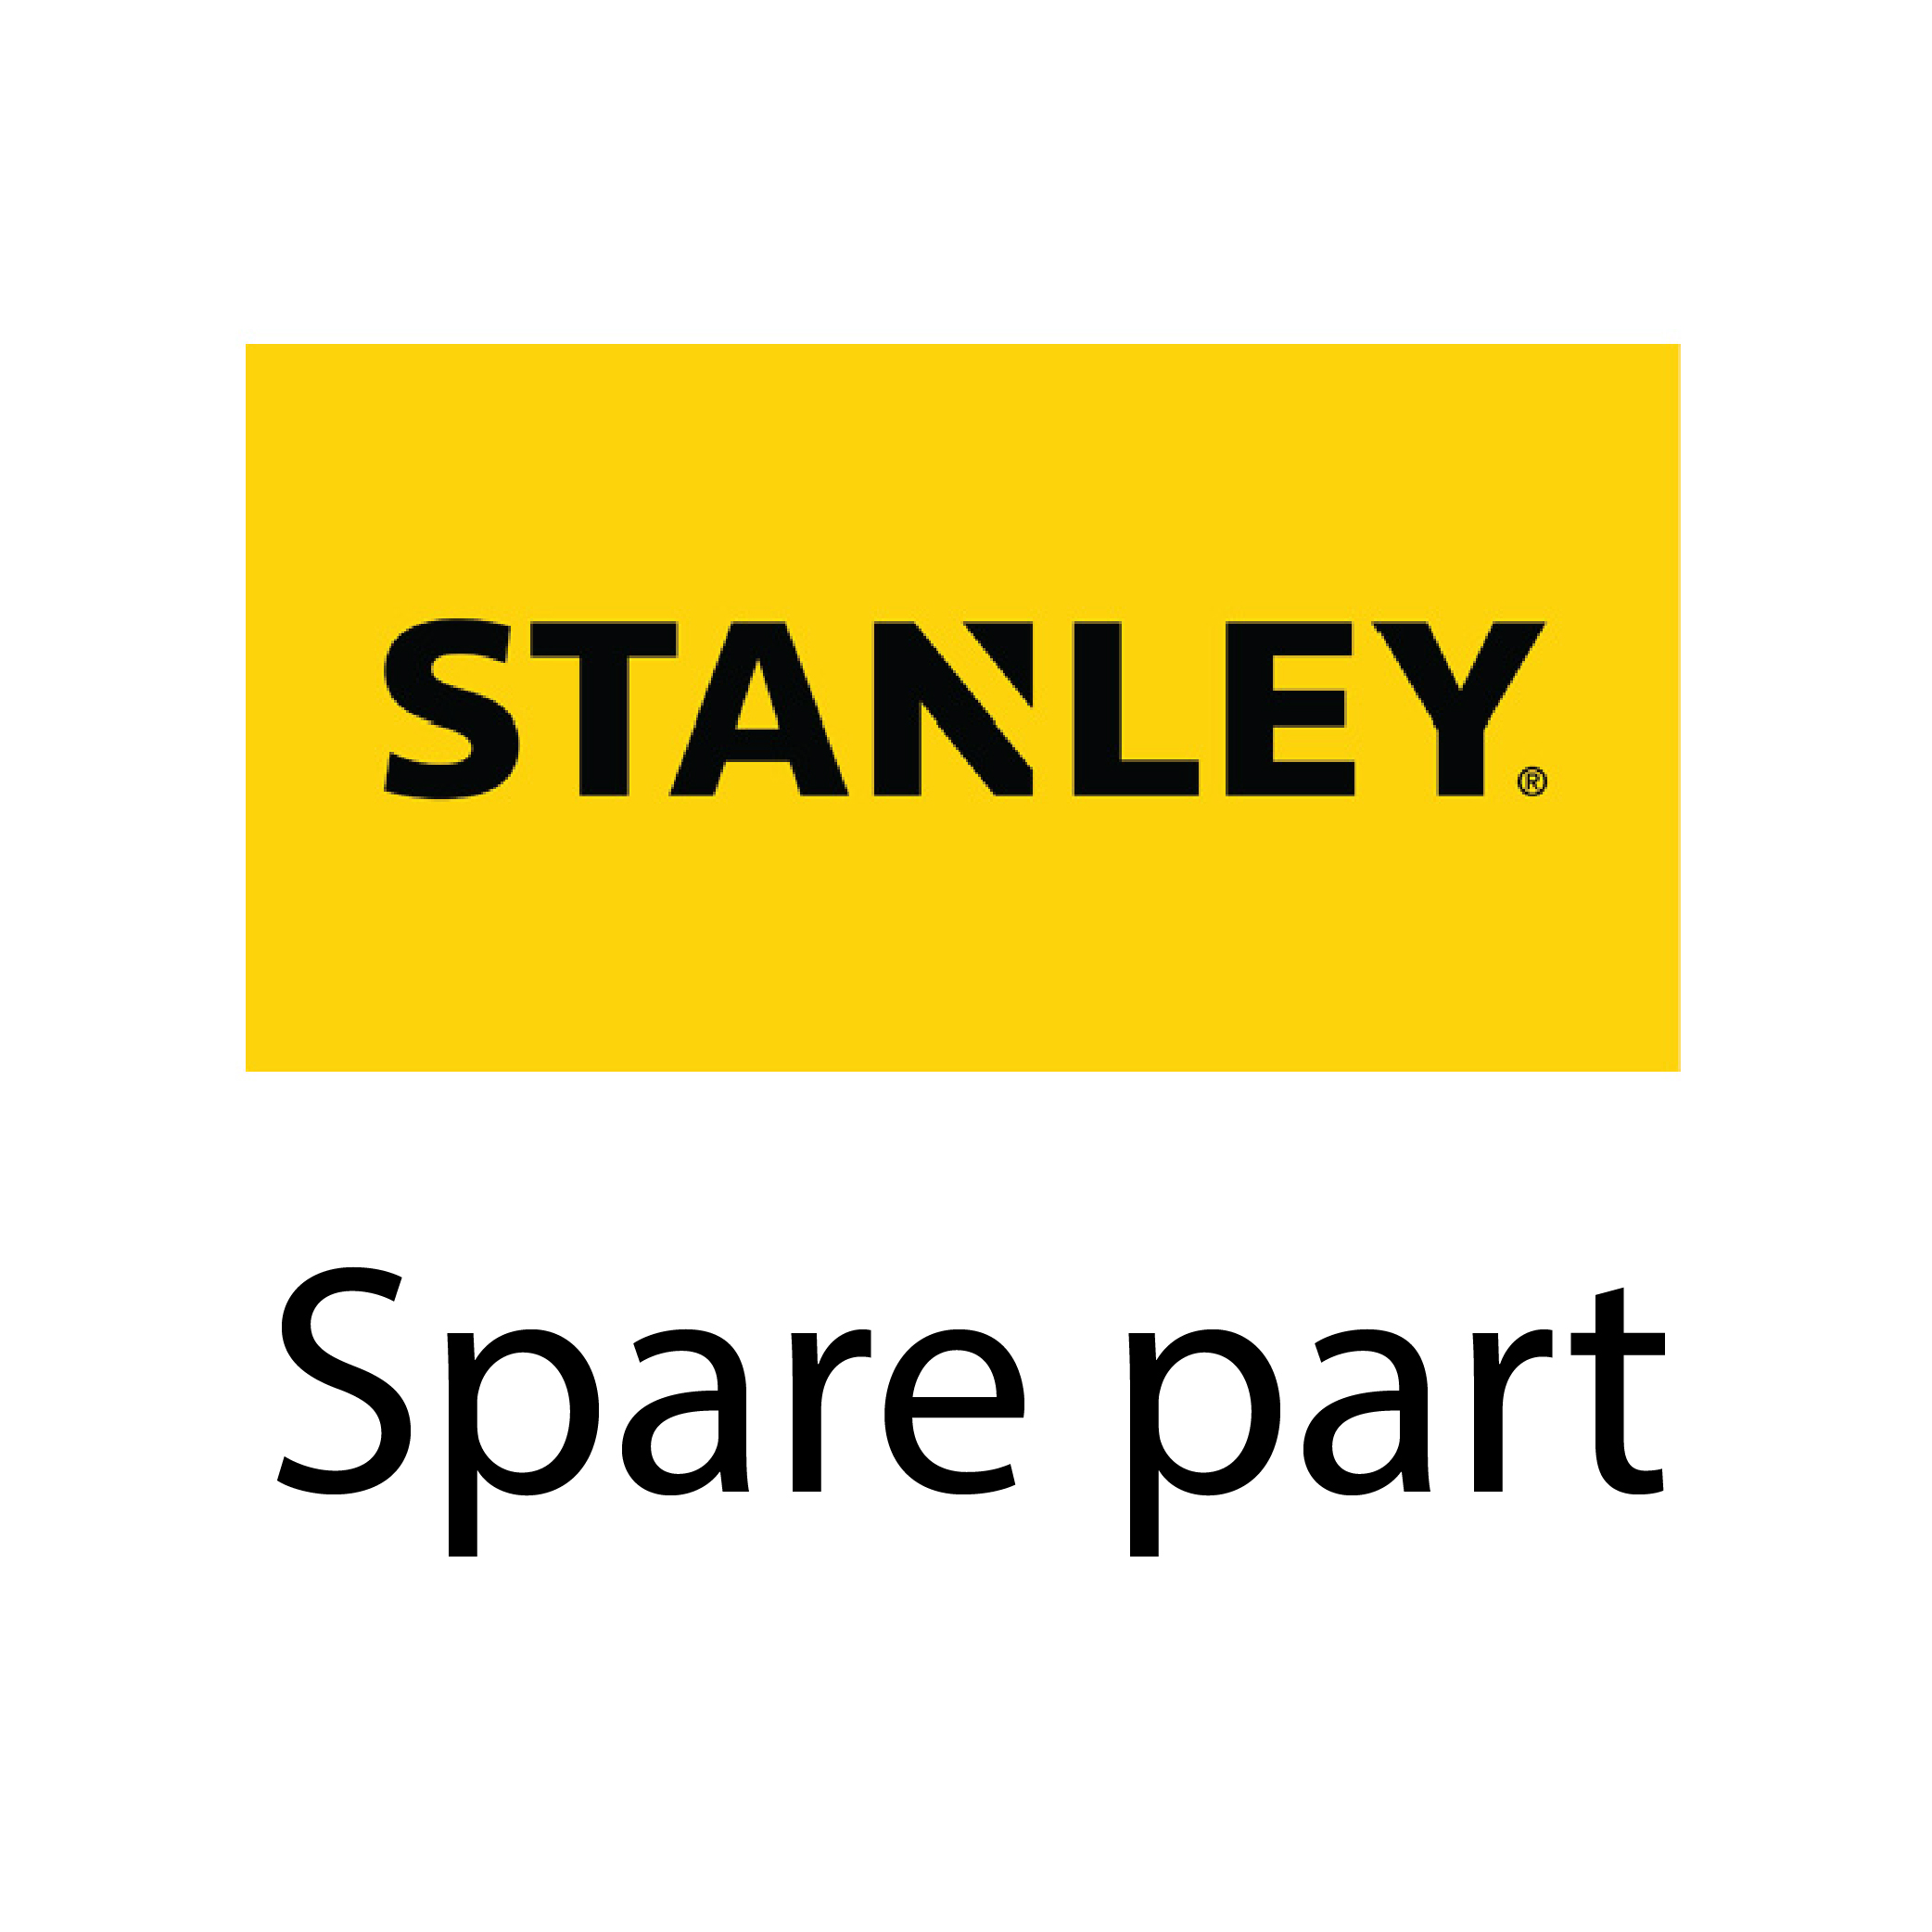 SKI - สกี จำหน่ายสินค้าหลากหลาย และคุณภาพดี | STANLEY #29-862 ปลอก(อะไหล่)ลูกกลิ้ง 9นิ้ว ขนสั้น [36อัน/กล่อง] (PBT)